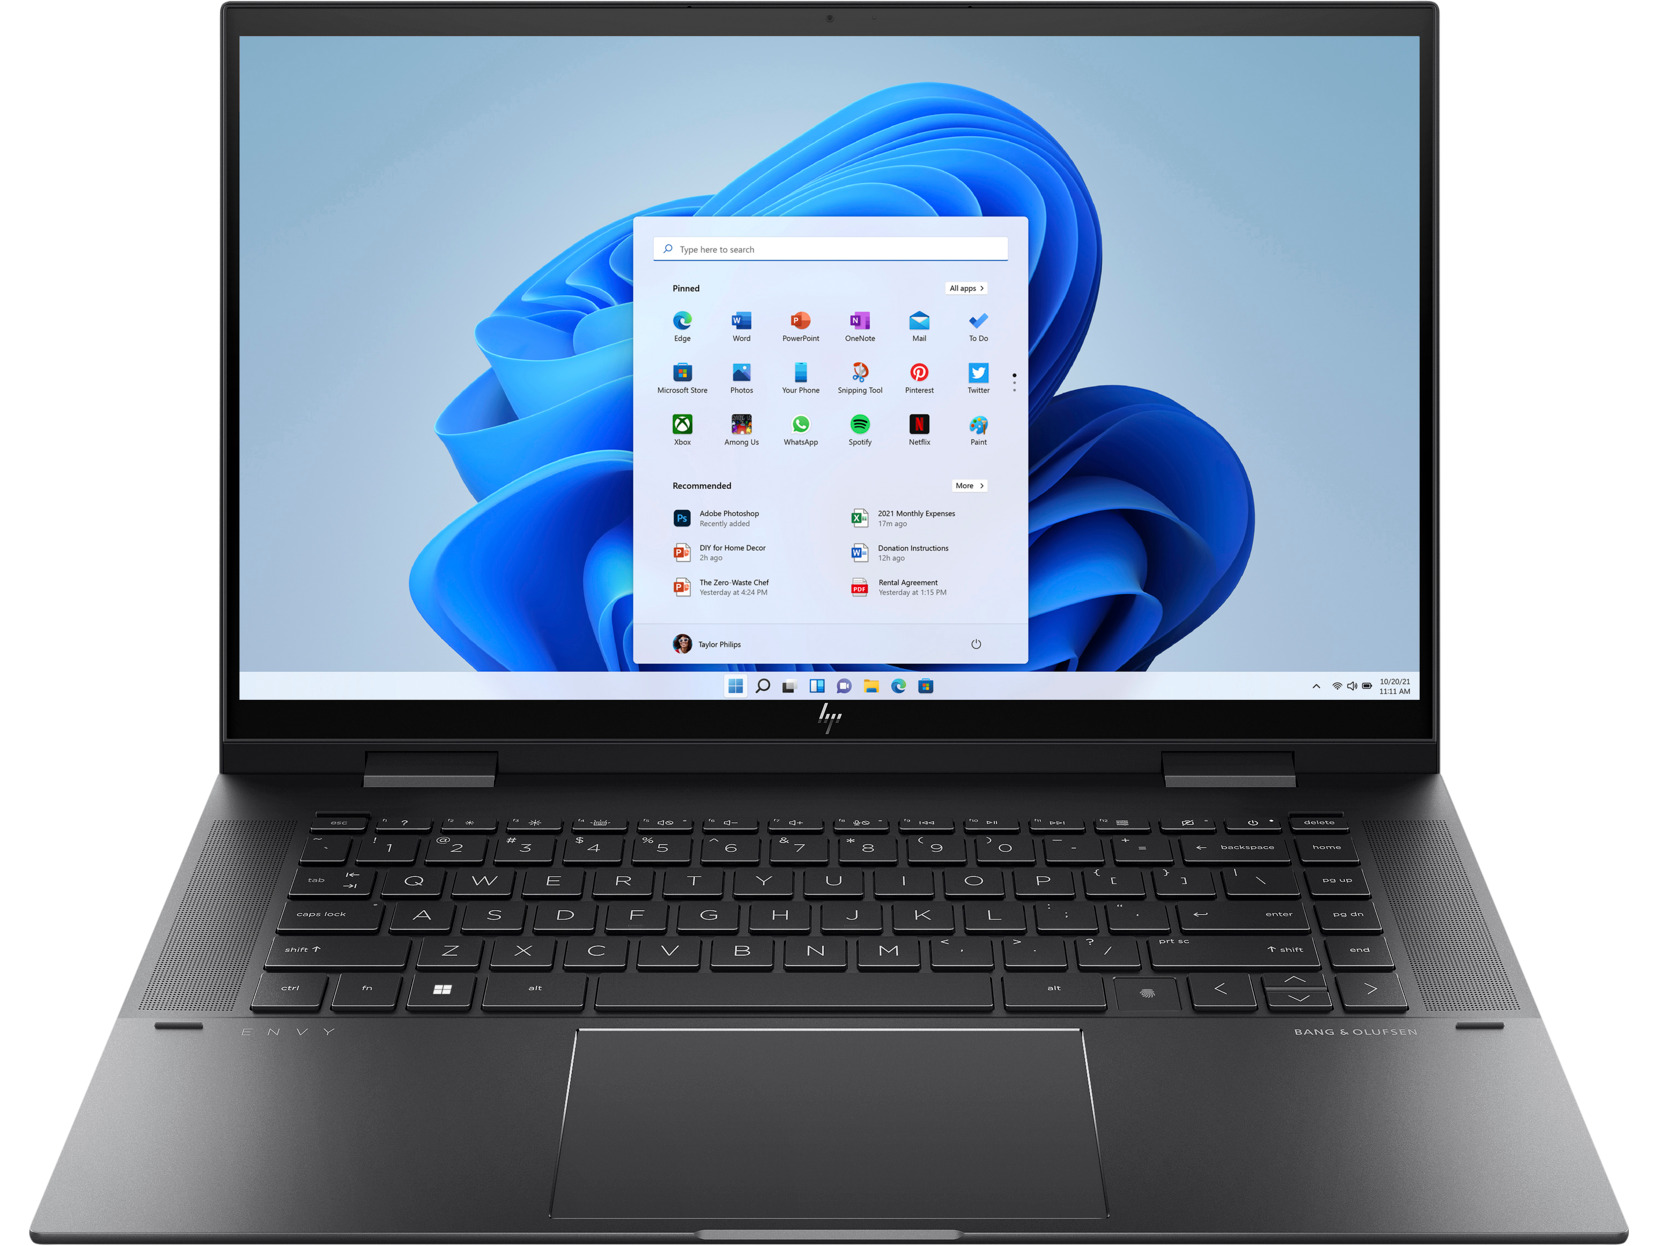 Um laptop conversível HP Envy x360 fica aberto.